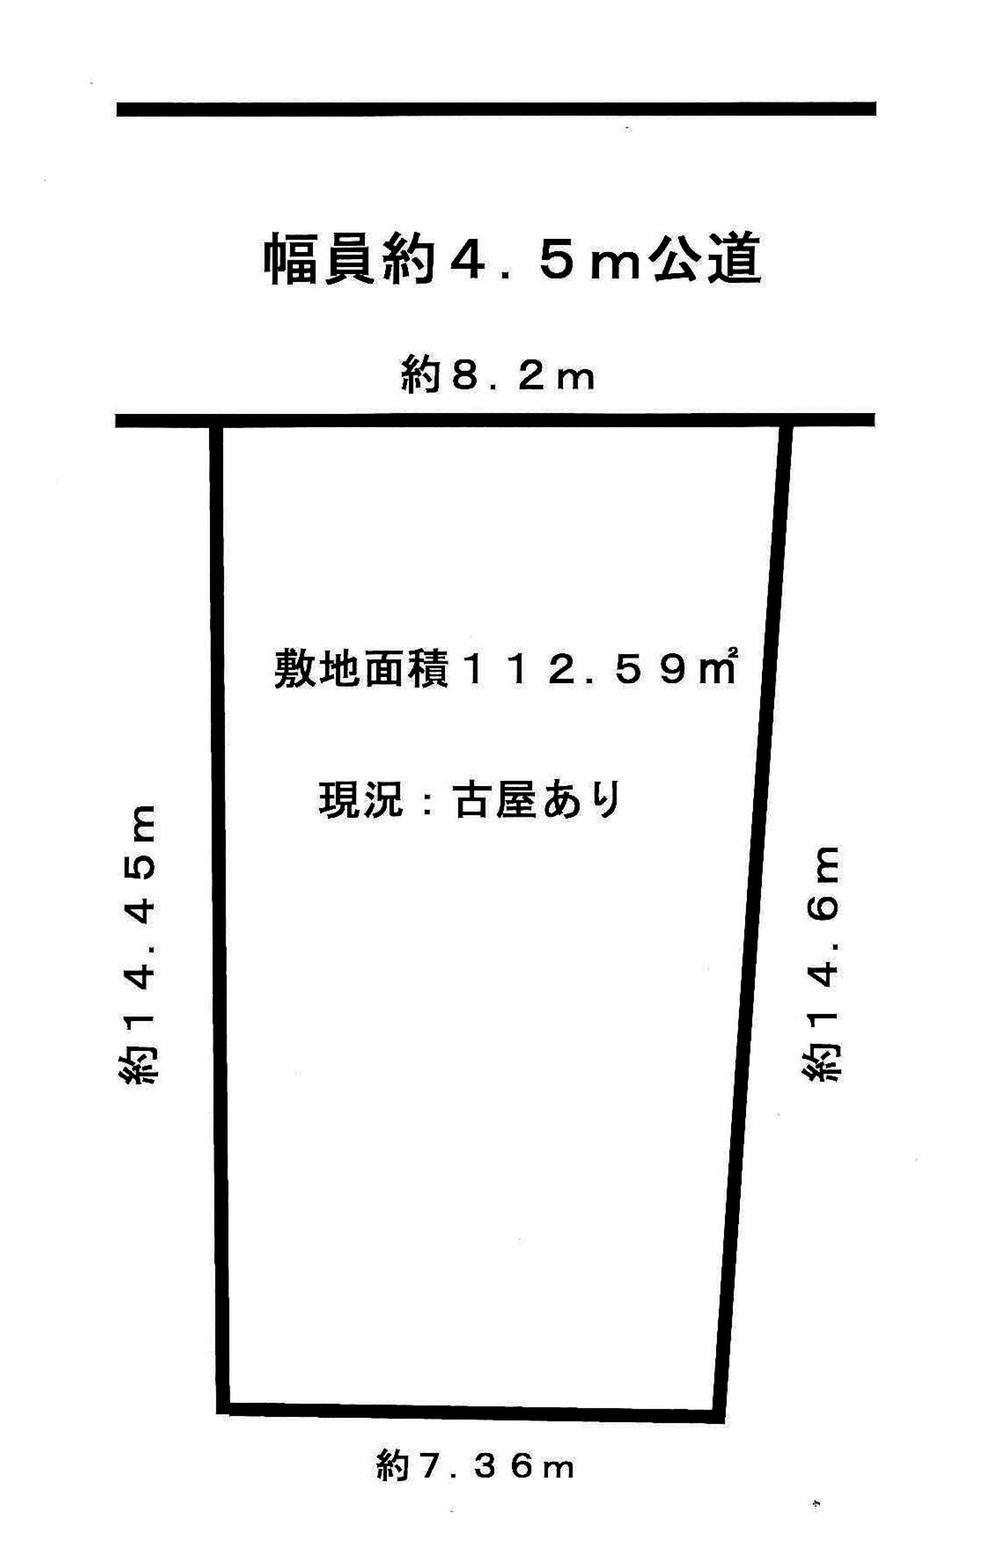 Compartment figure. Land price 11.9 million yen, Land area 112.59 sq m